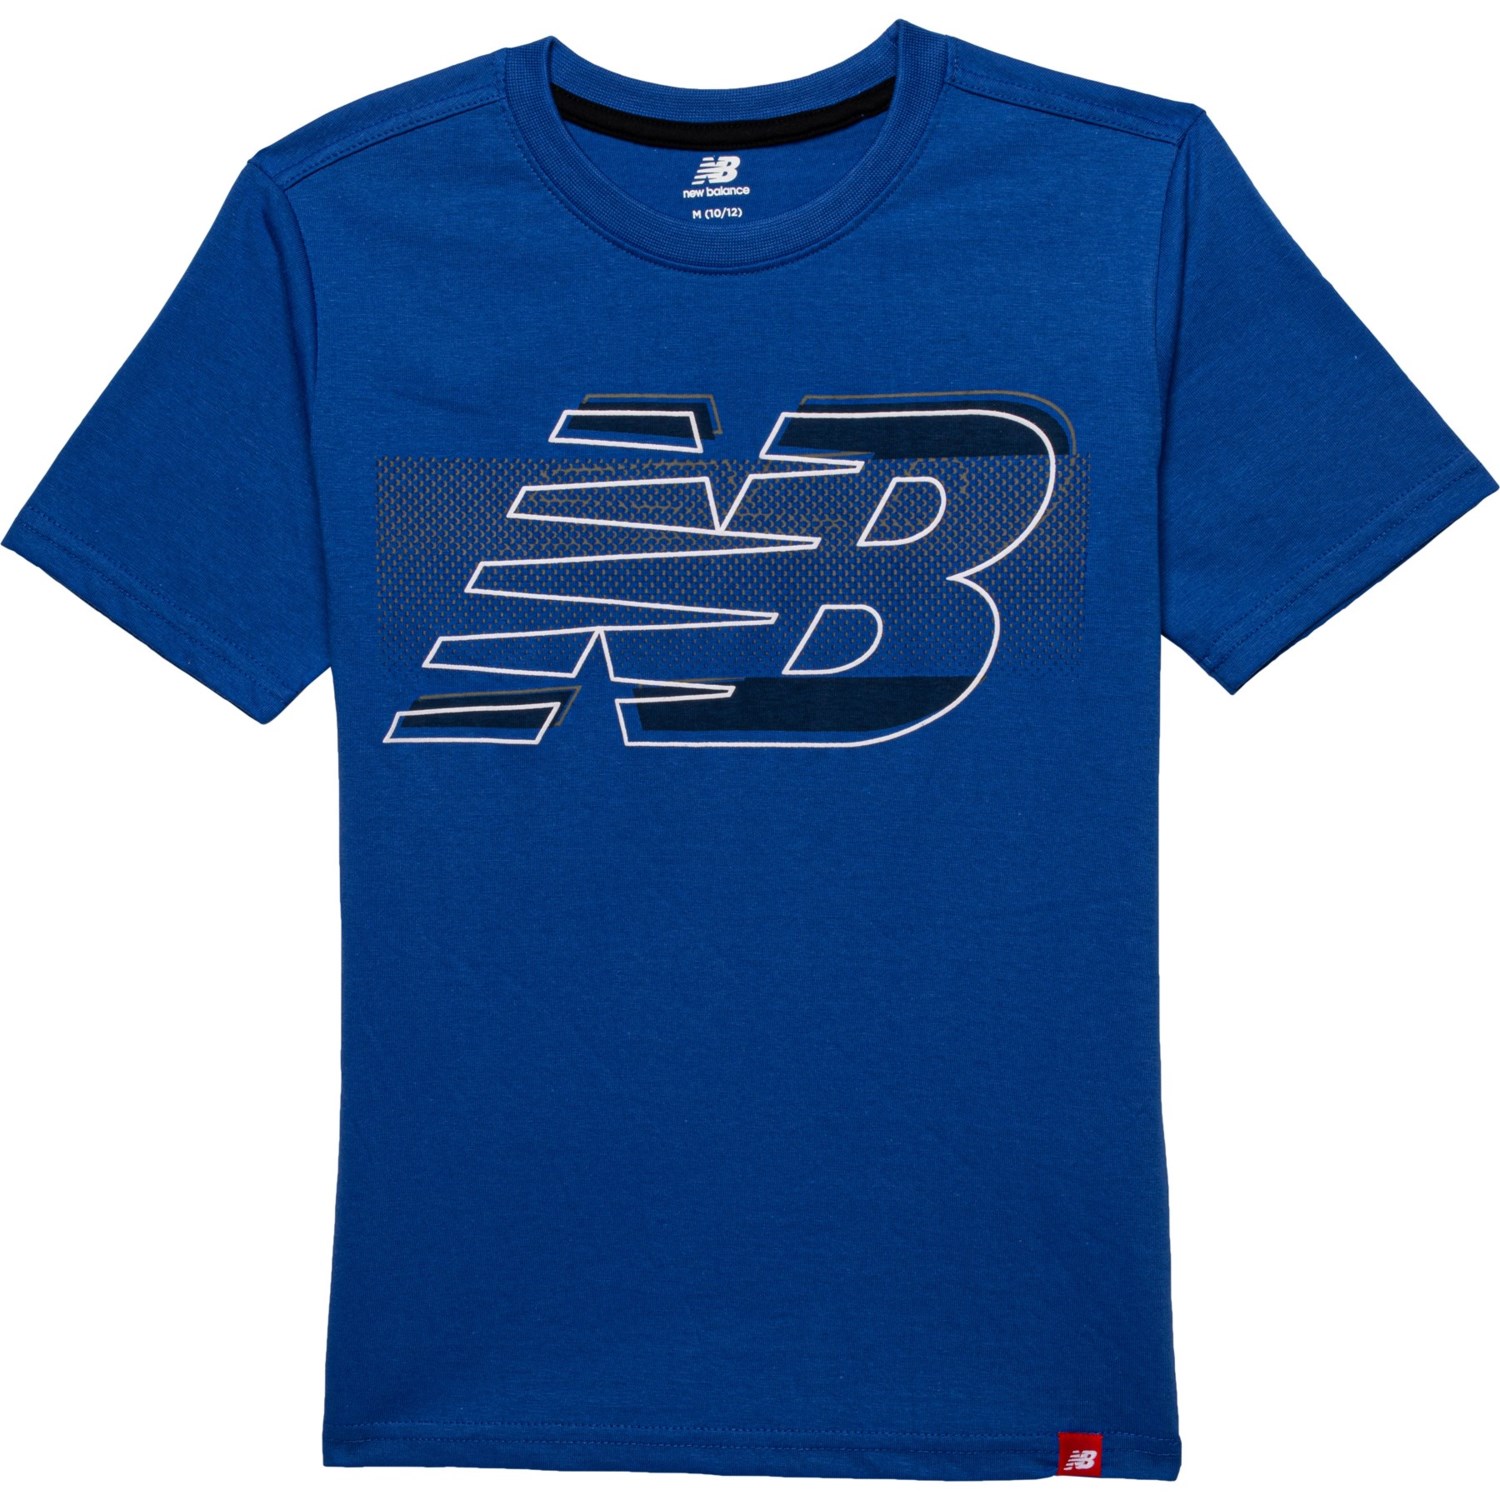 New Balance Big Boys Graphic T-Shirt - Short Sleeve